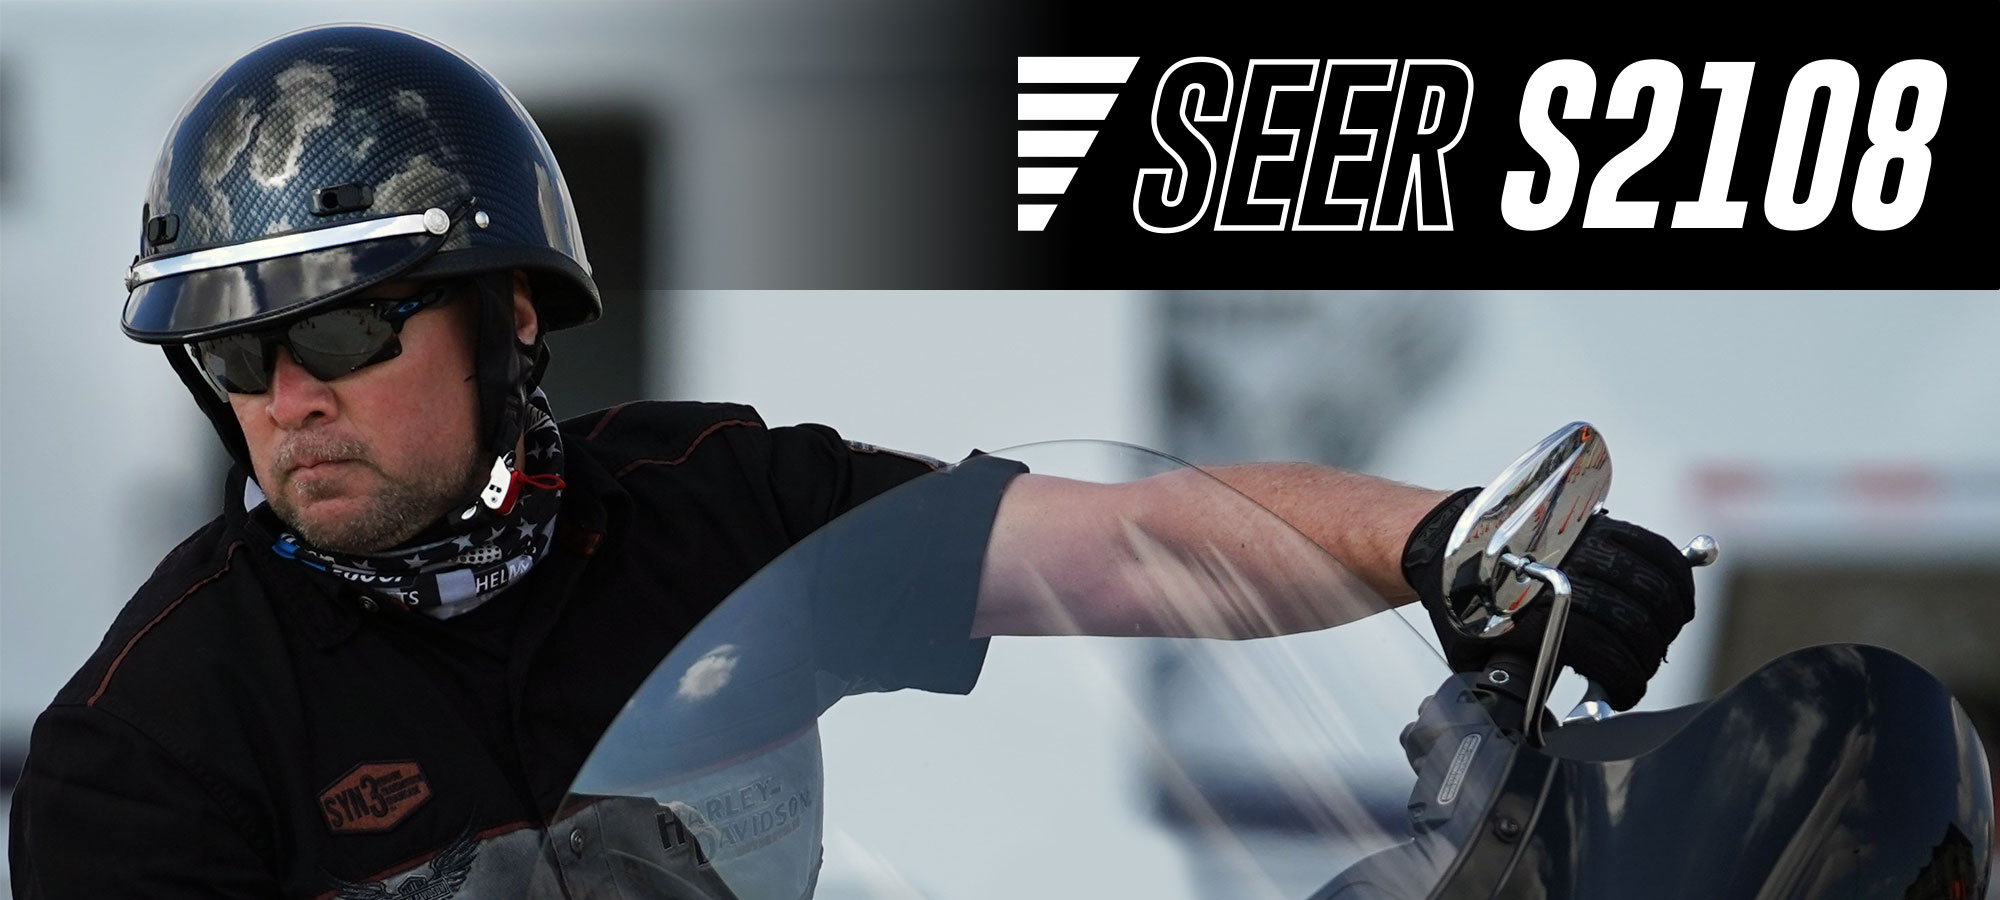 Super Seer S2108 Carbon Fiber Motorcycle Helmet